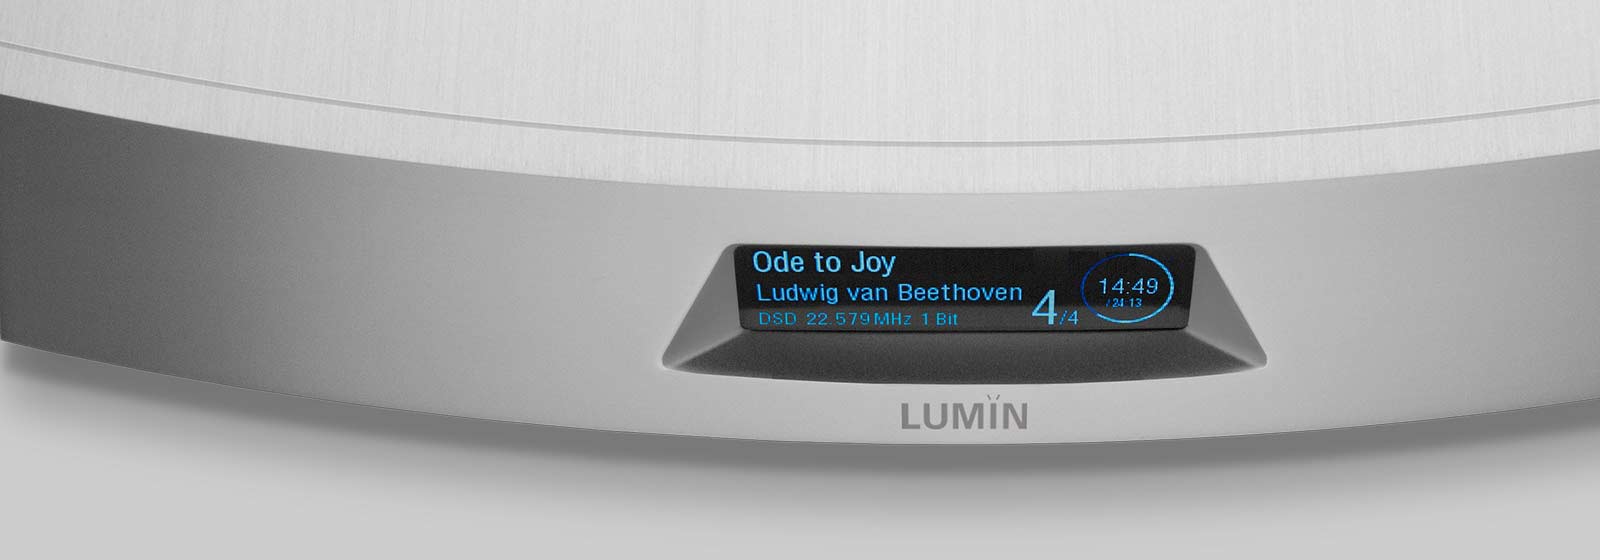 Lumin-T2-Network-Streamer-display